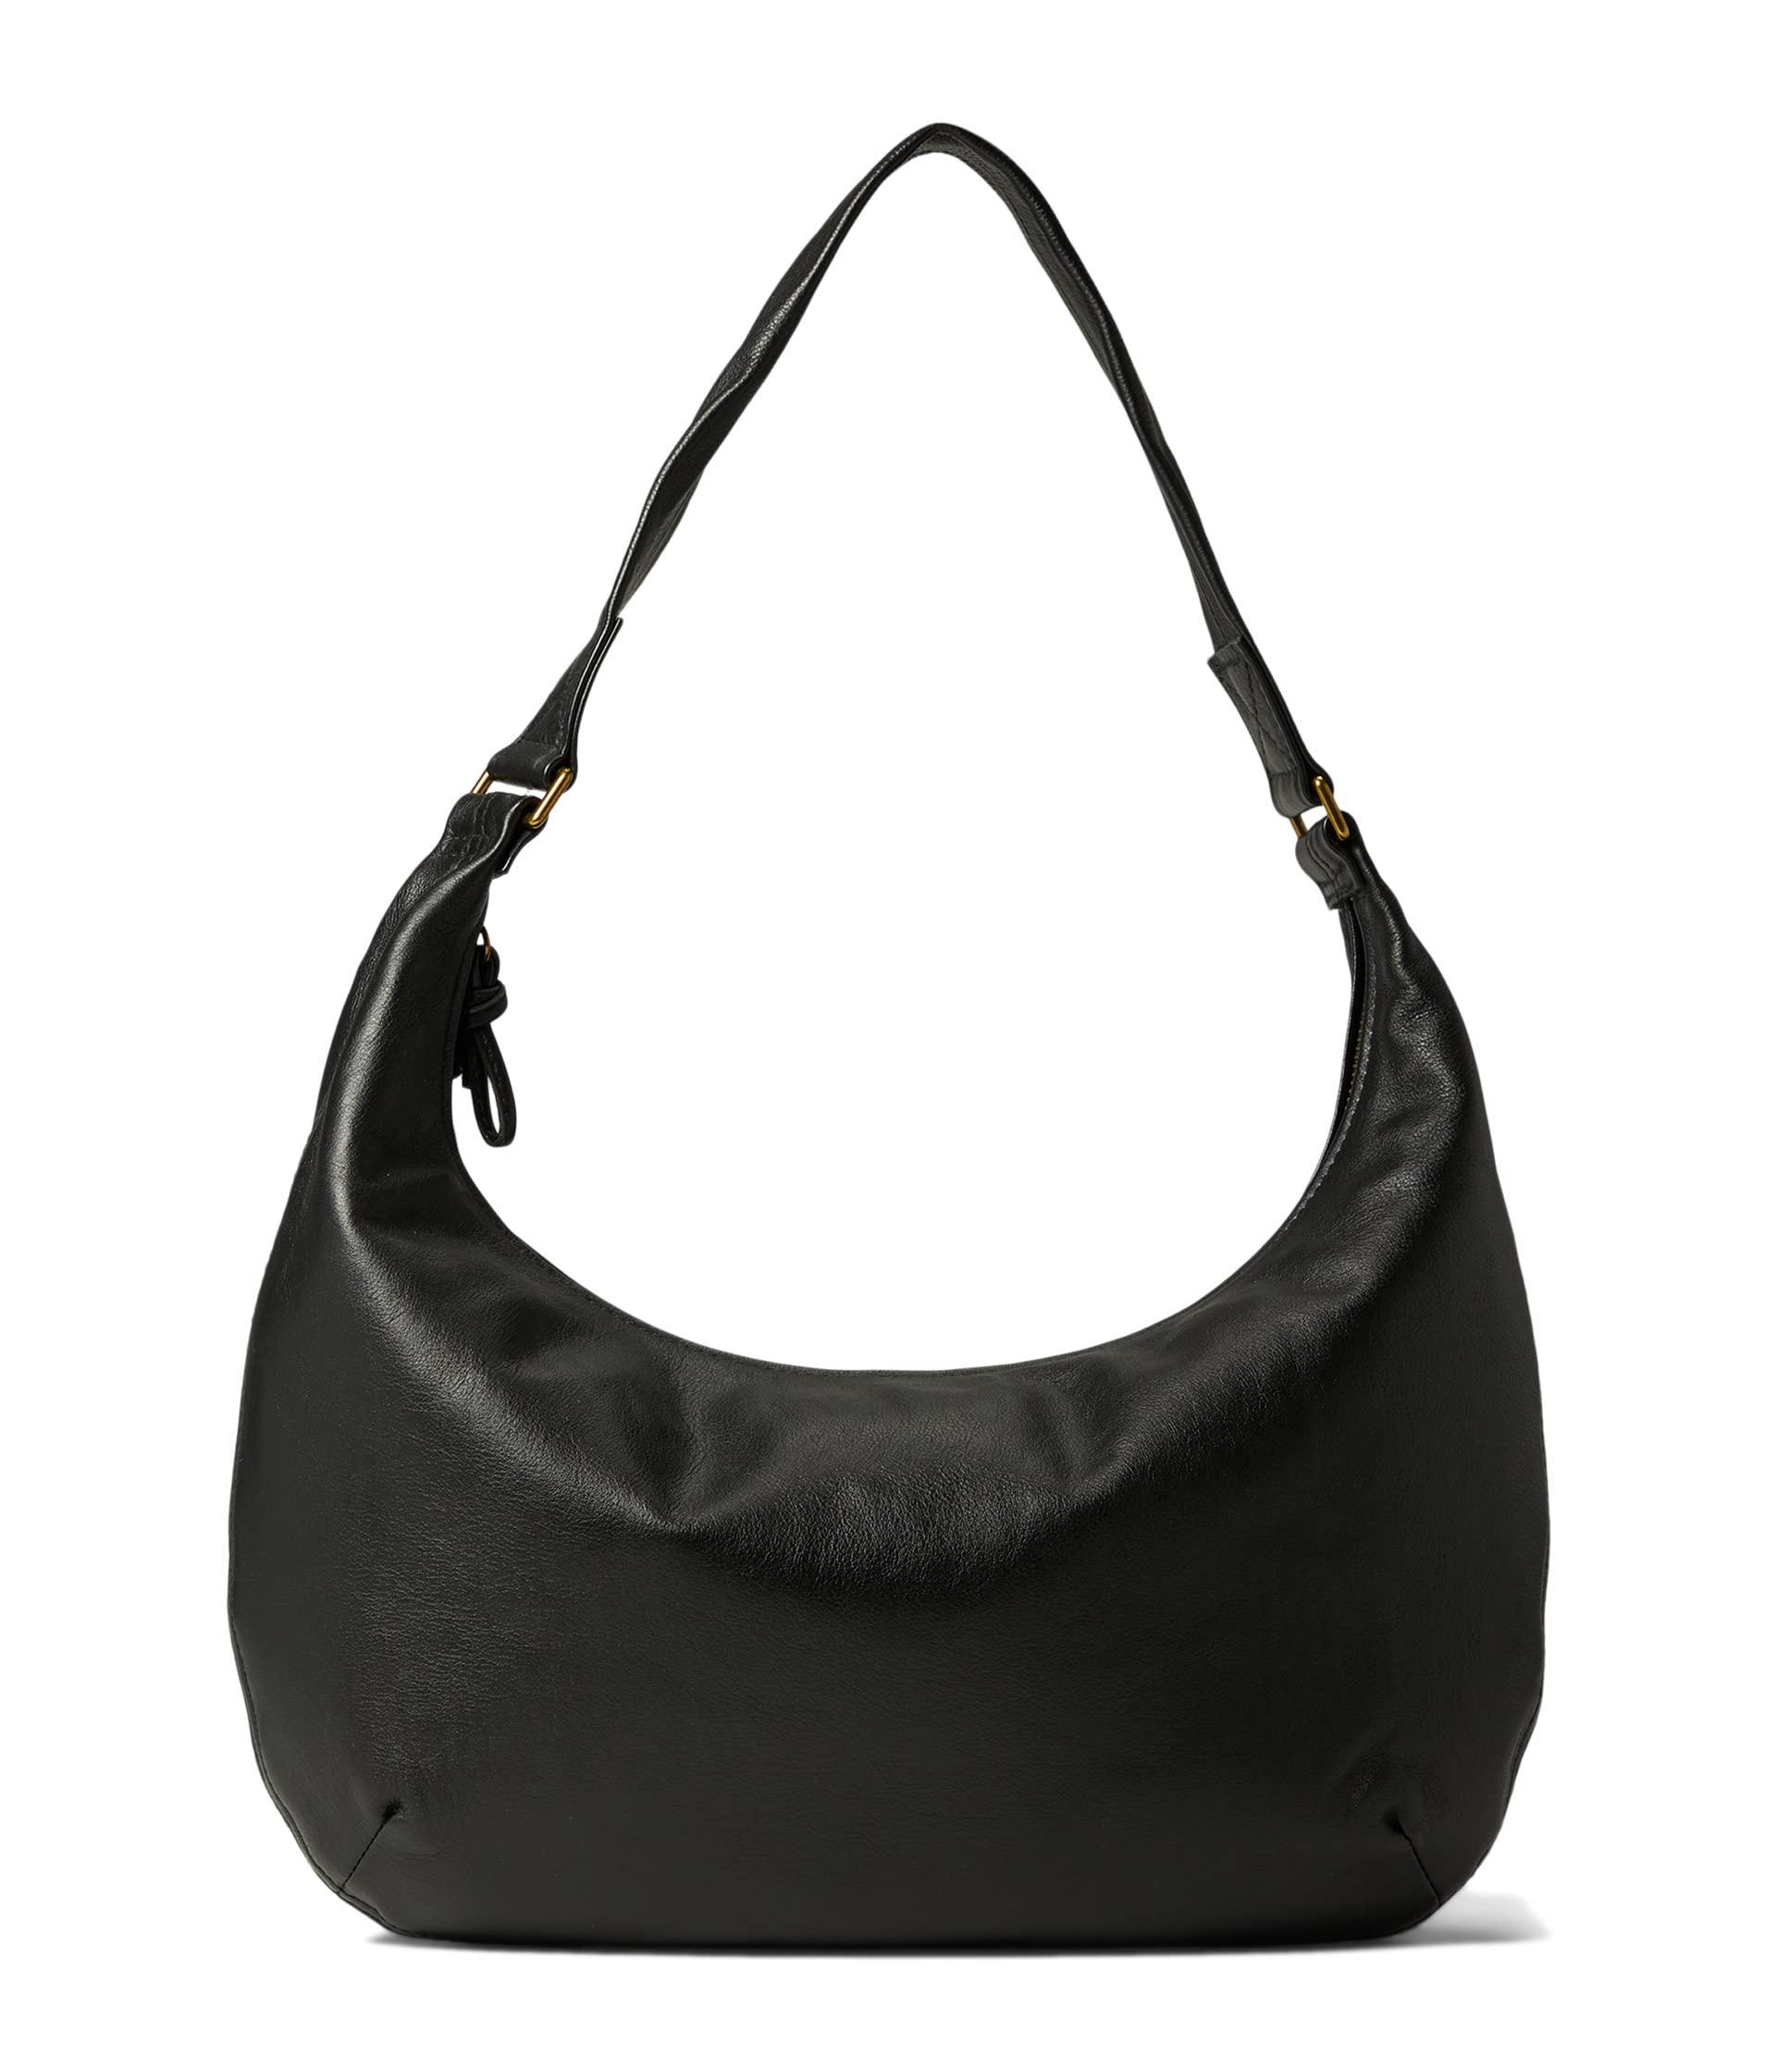 Madewell Soft Hobo Bag in Black | Lyst